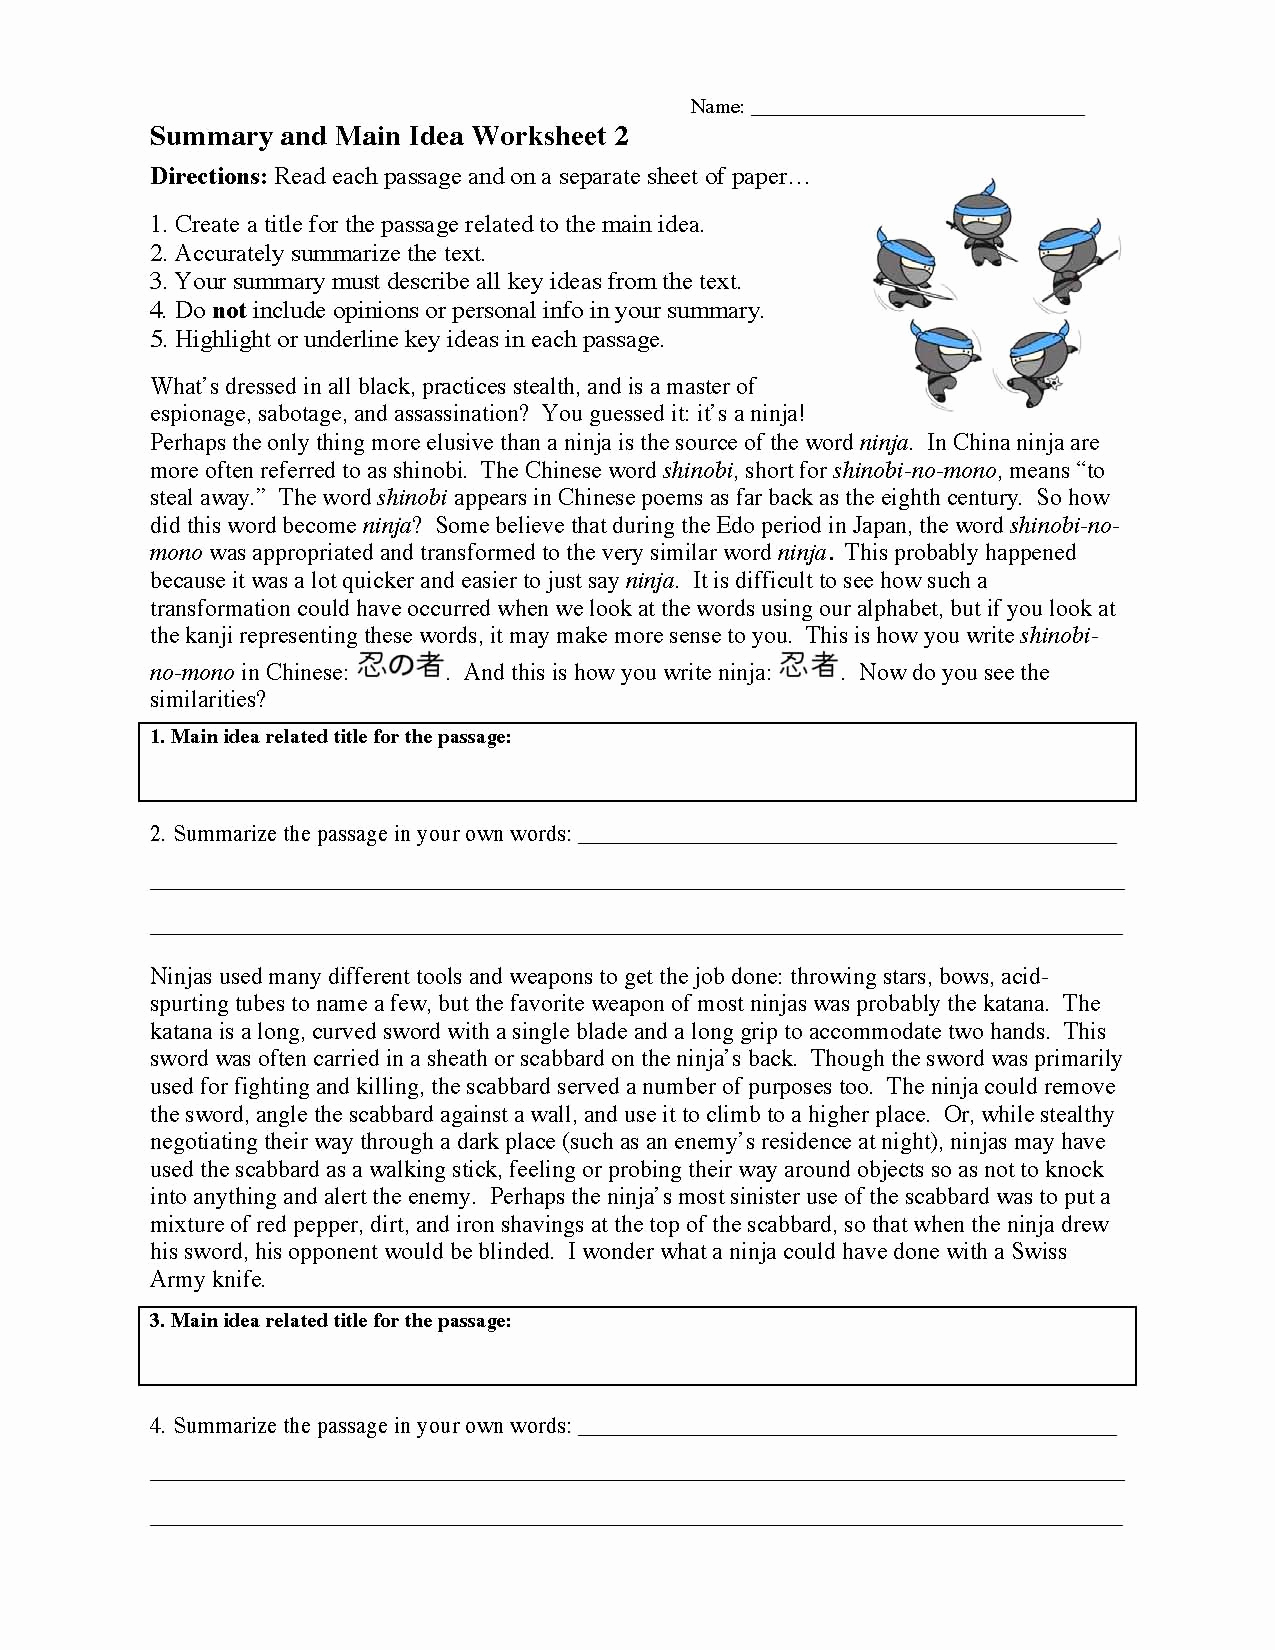 Summary Worksheets Middle School Fresh Main Idea Multiple Choice Worksheets Middle School